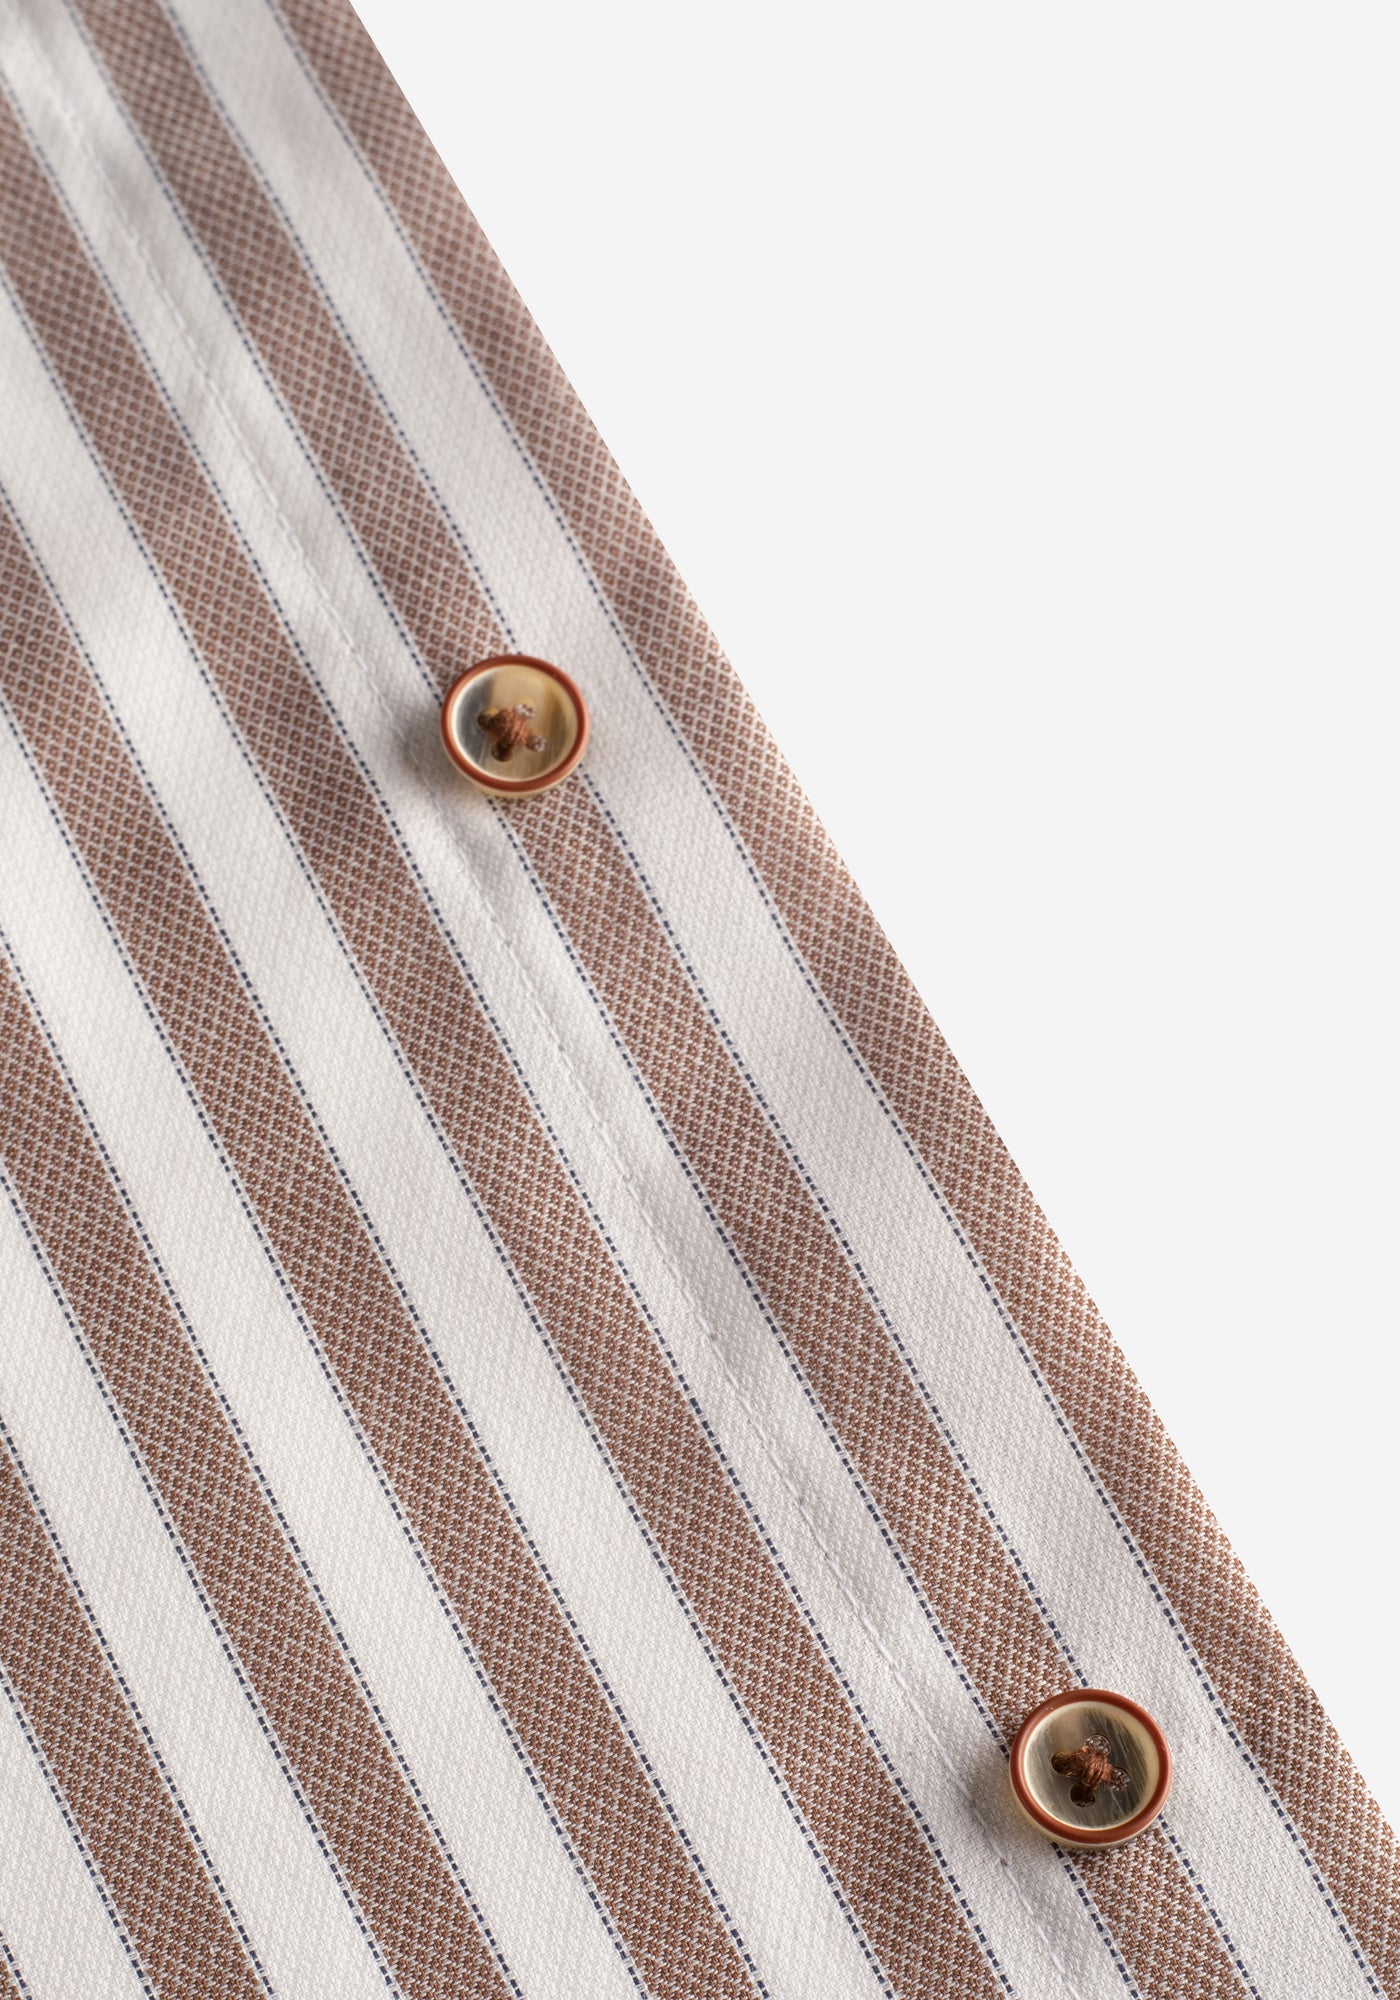 Deep Brown Stripe Two-Ply Oxford Shirt - Short Sleeve